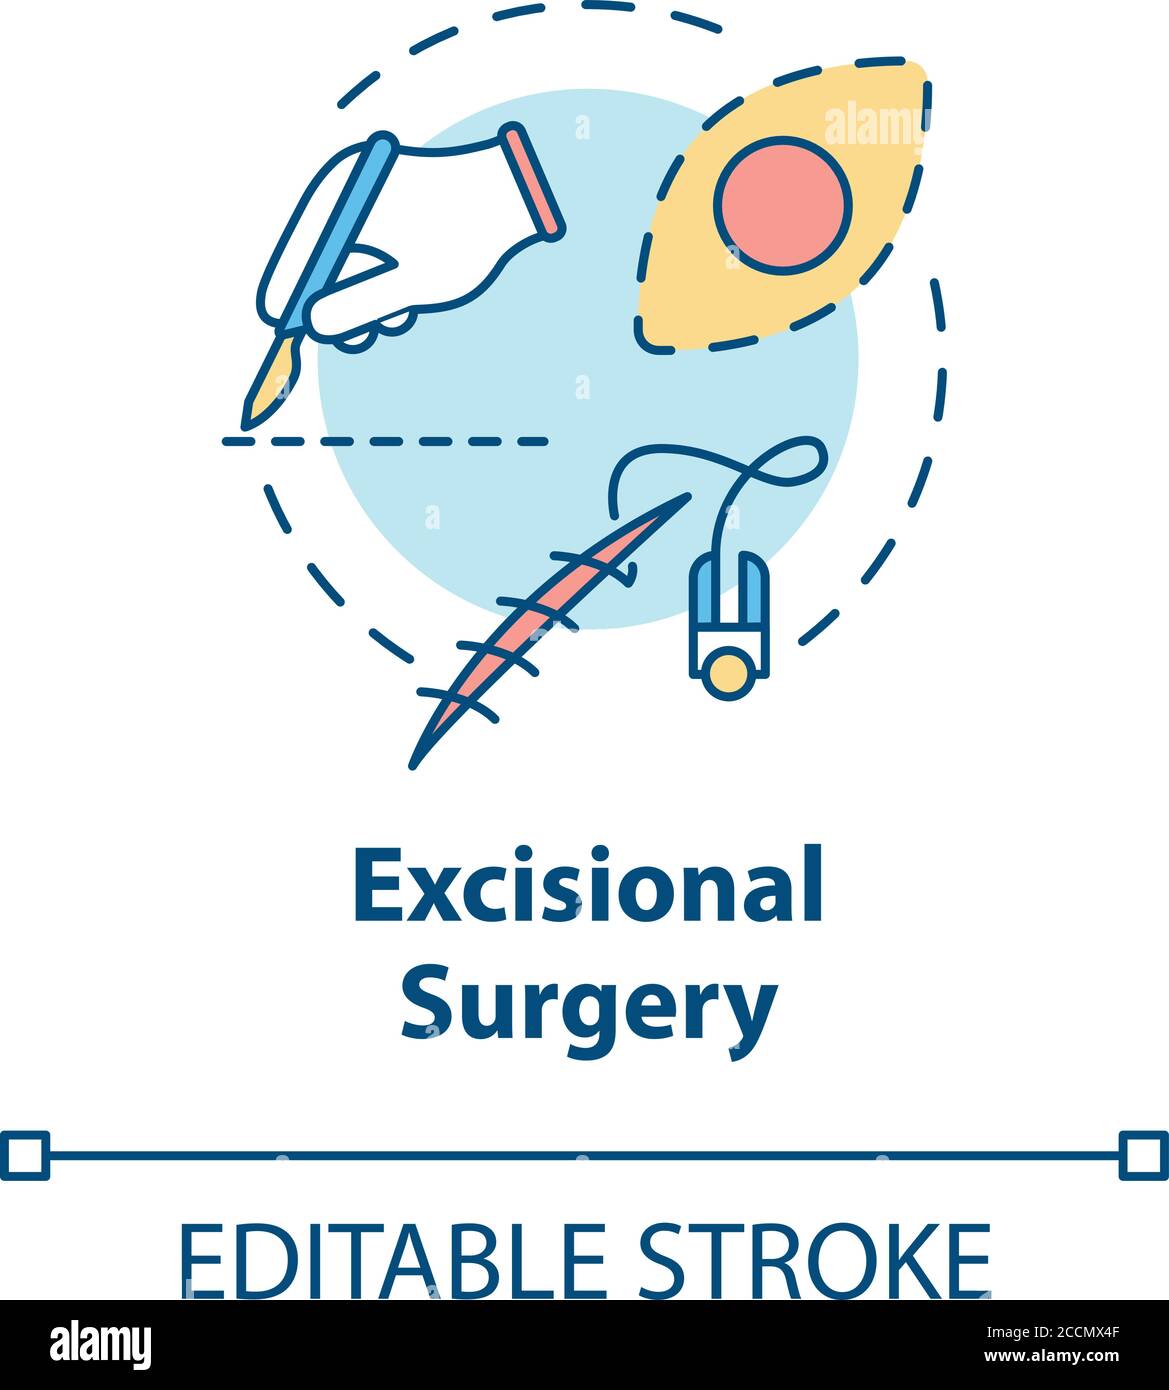 Excisional surgery concept icon Stock Vector